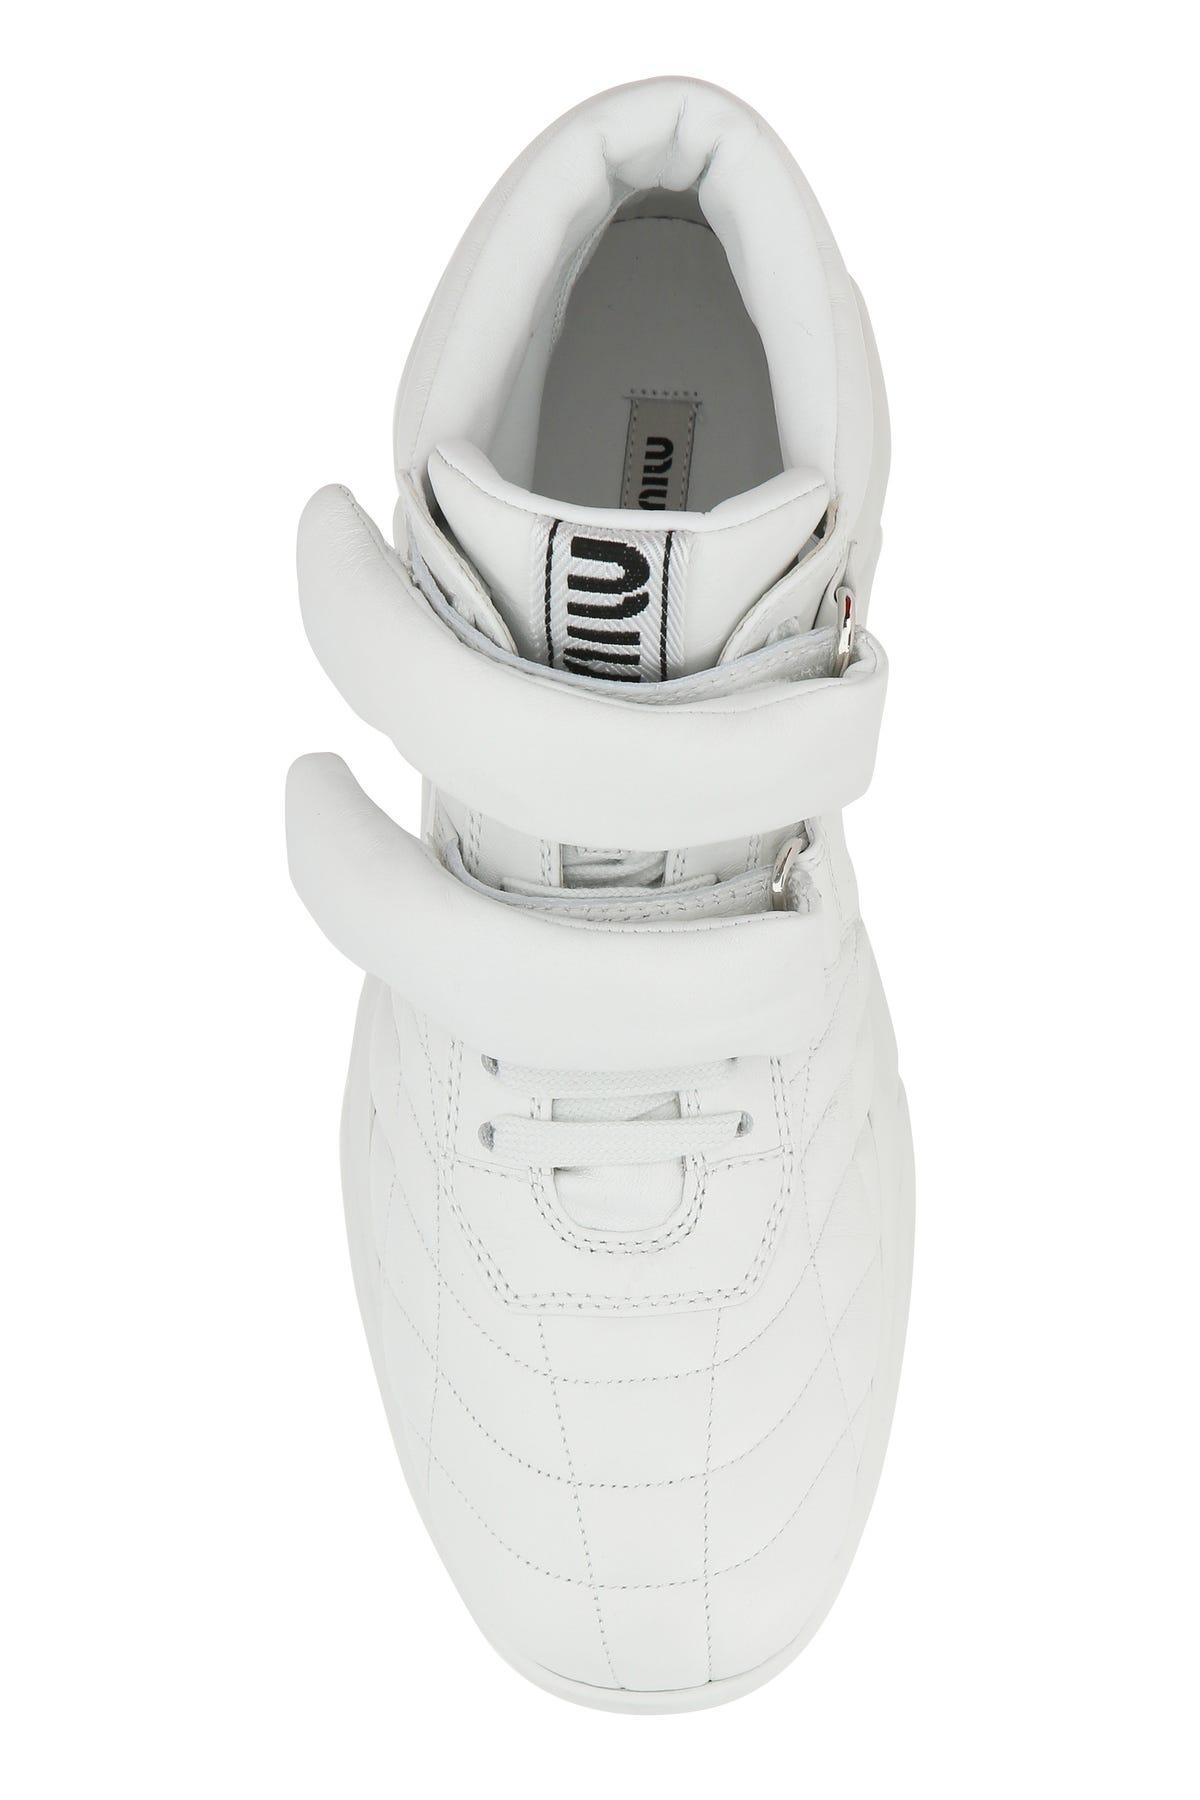 Miu Miu White Nappa Leather Sneakers - Save 39% - Lyst